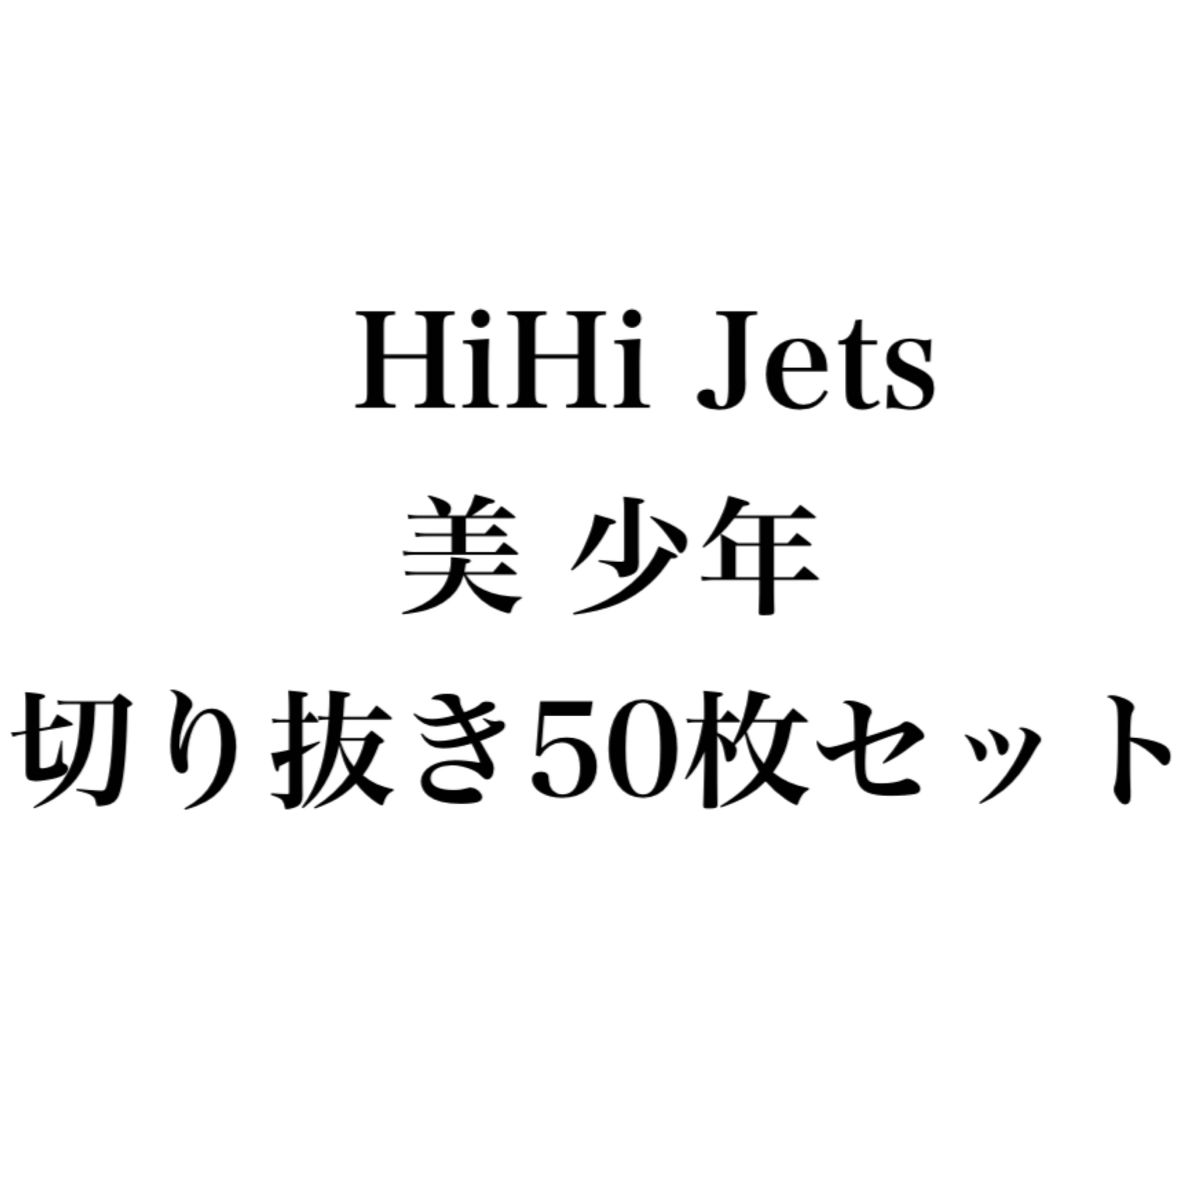 HiHi Jets 美少年 切り抜き